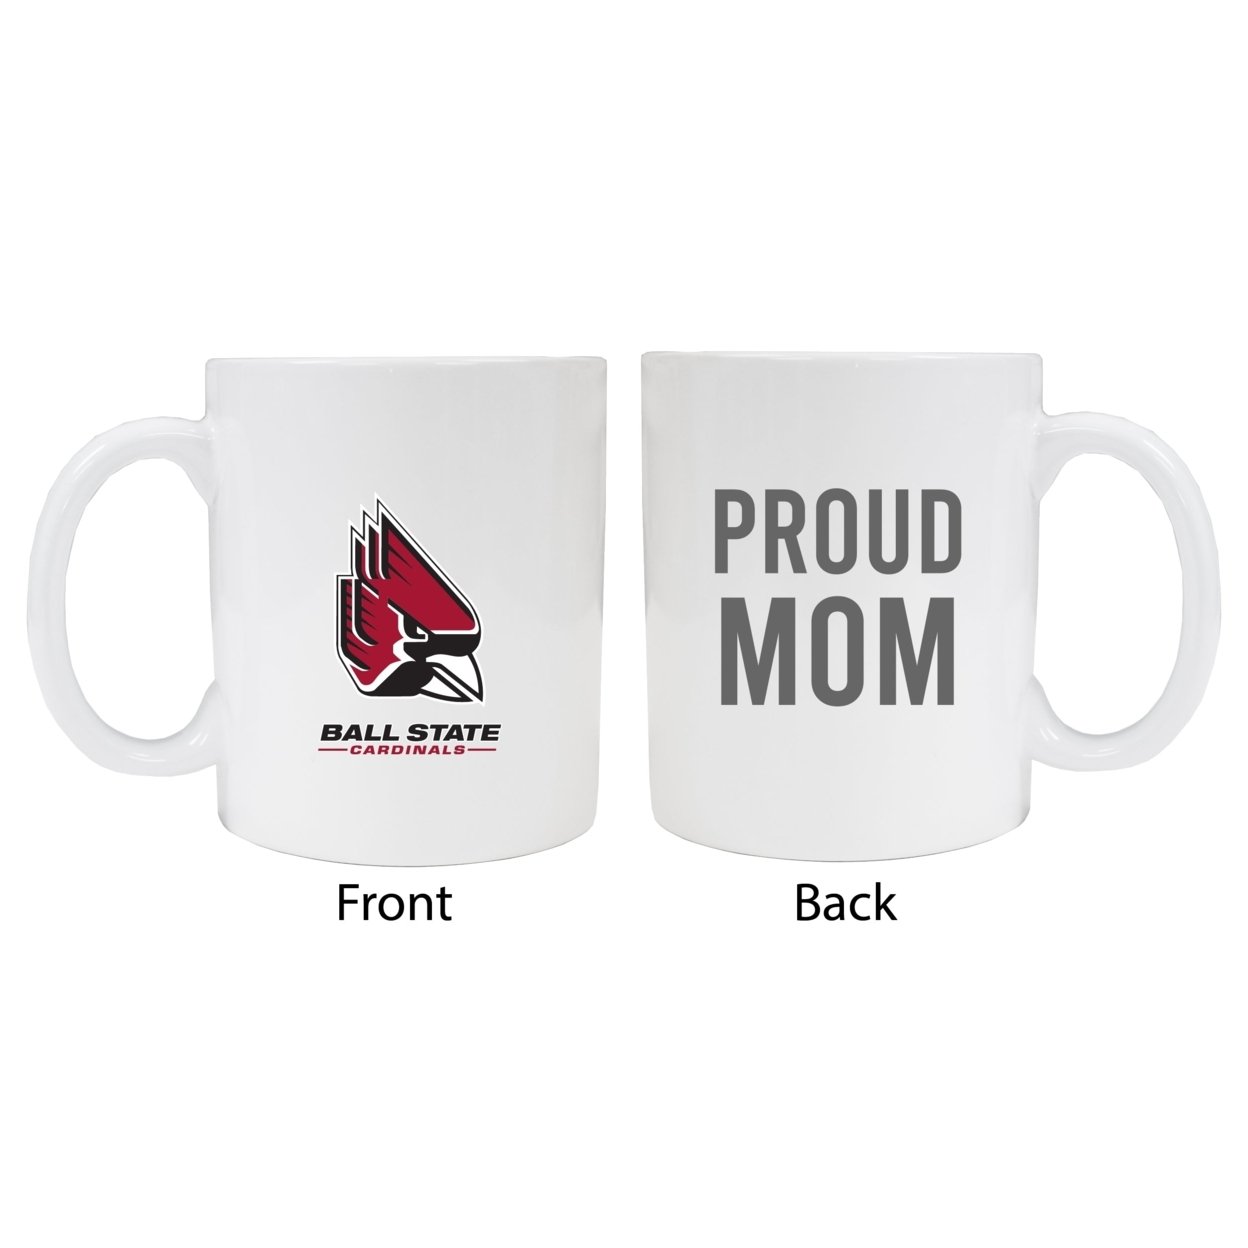 Ball State University Proud Mom Ceramic Coffee Mug - White